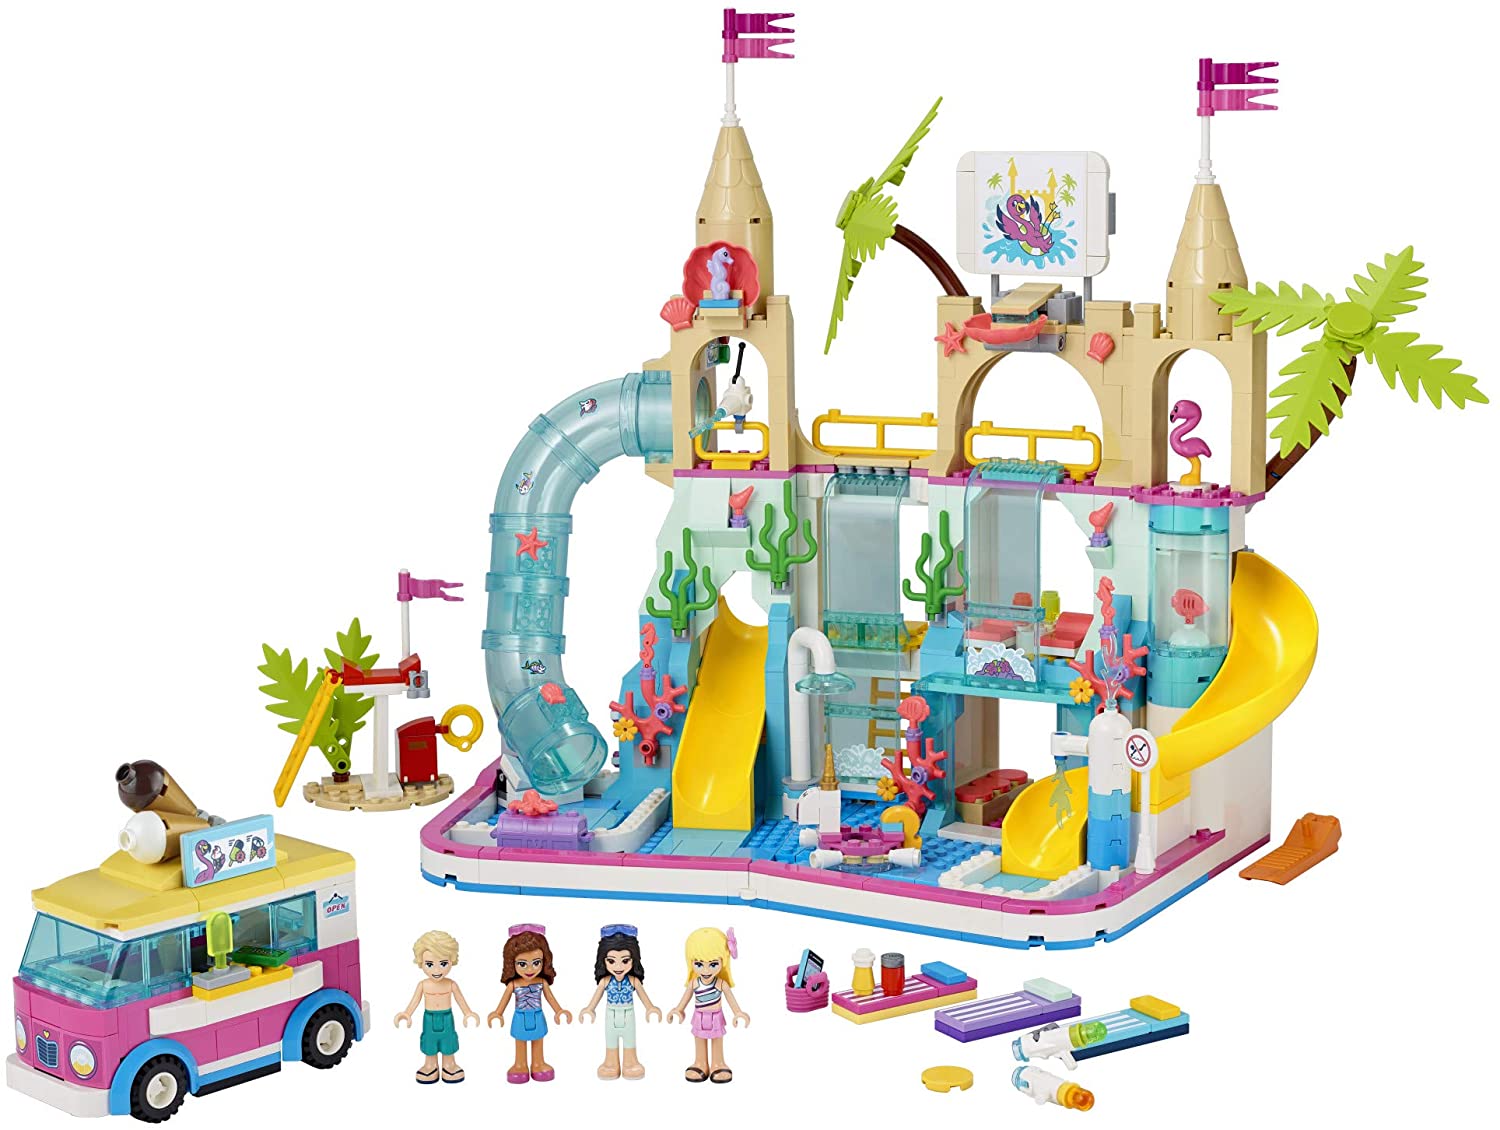 Lego Friends Summer Fun Water Park Playset - ANB Baby -block set